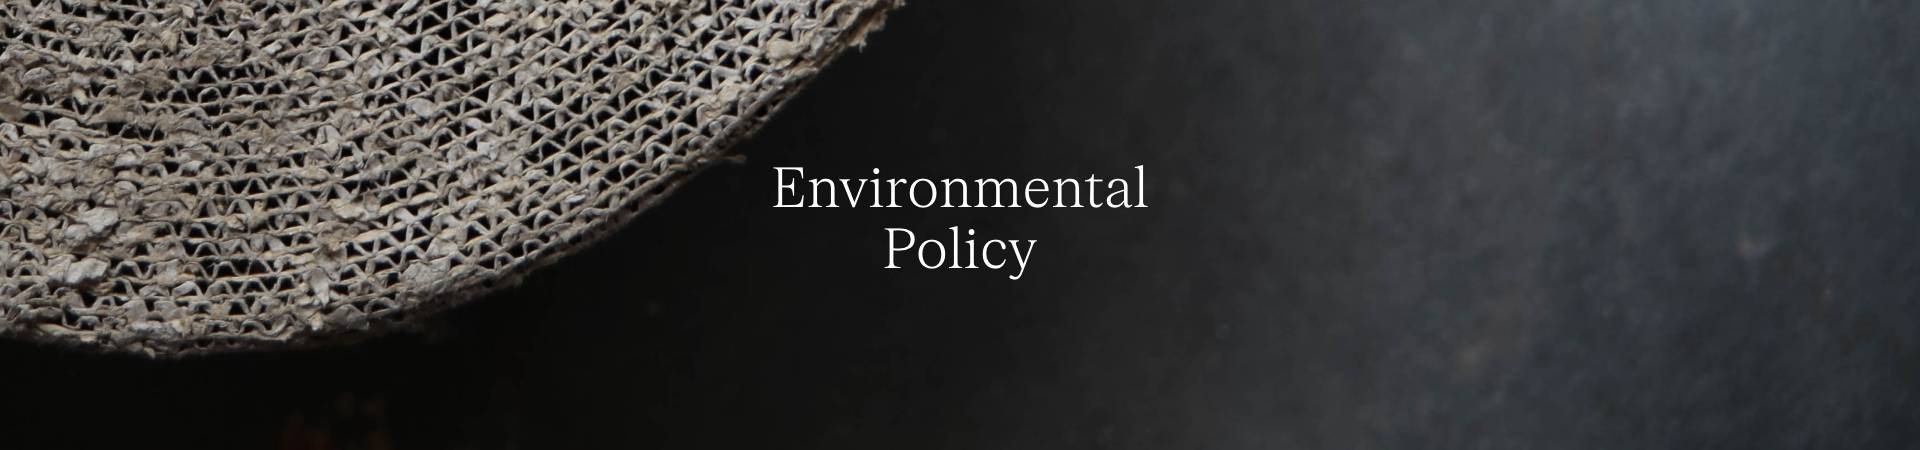 Environmental Policy.jpg